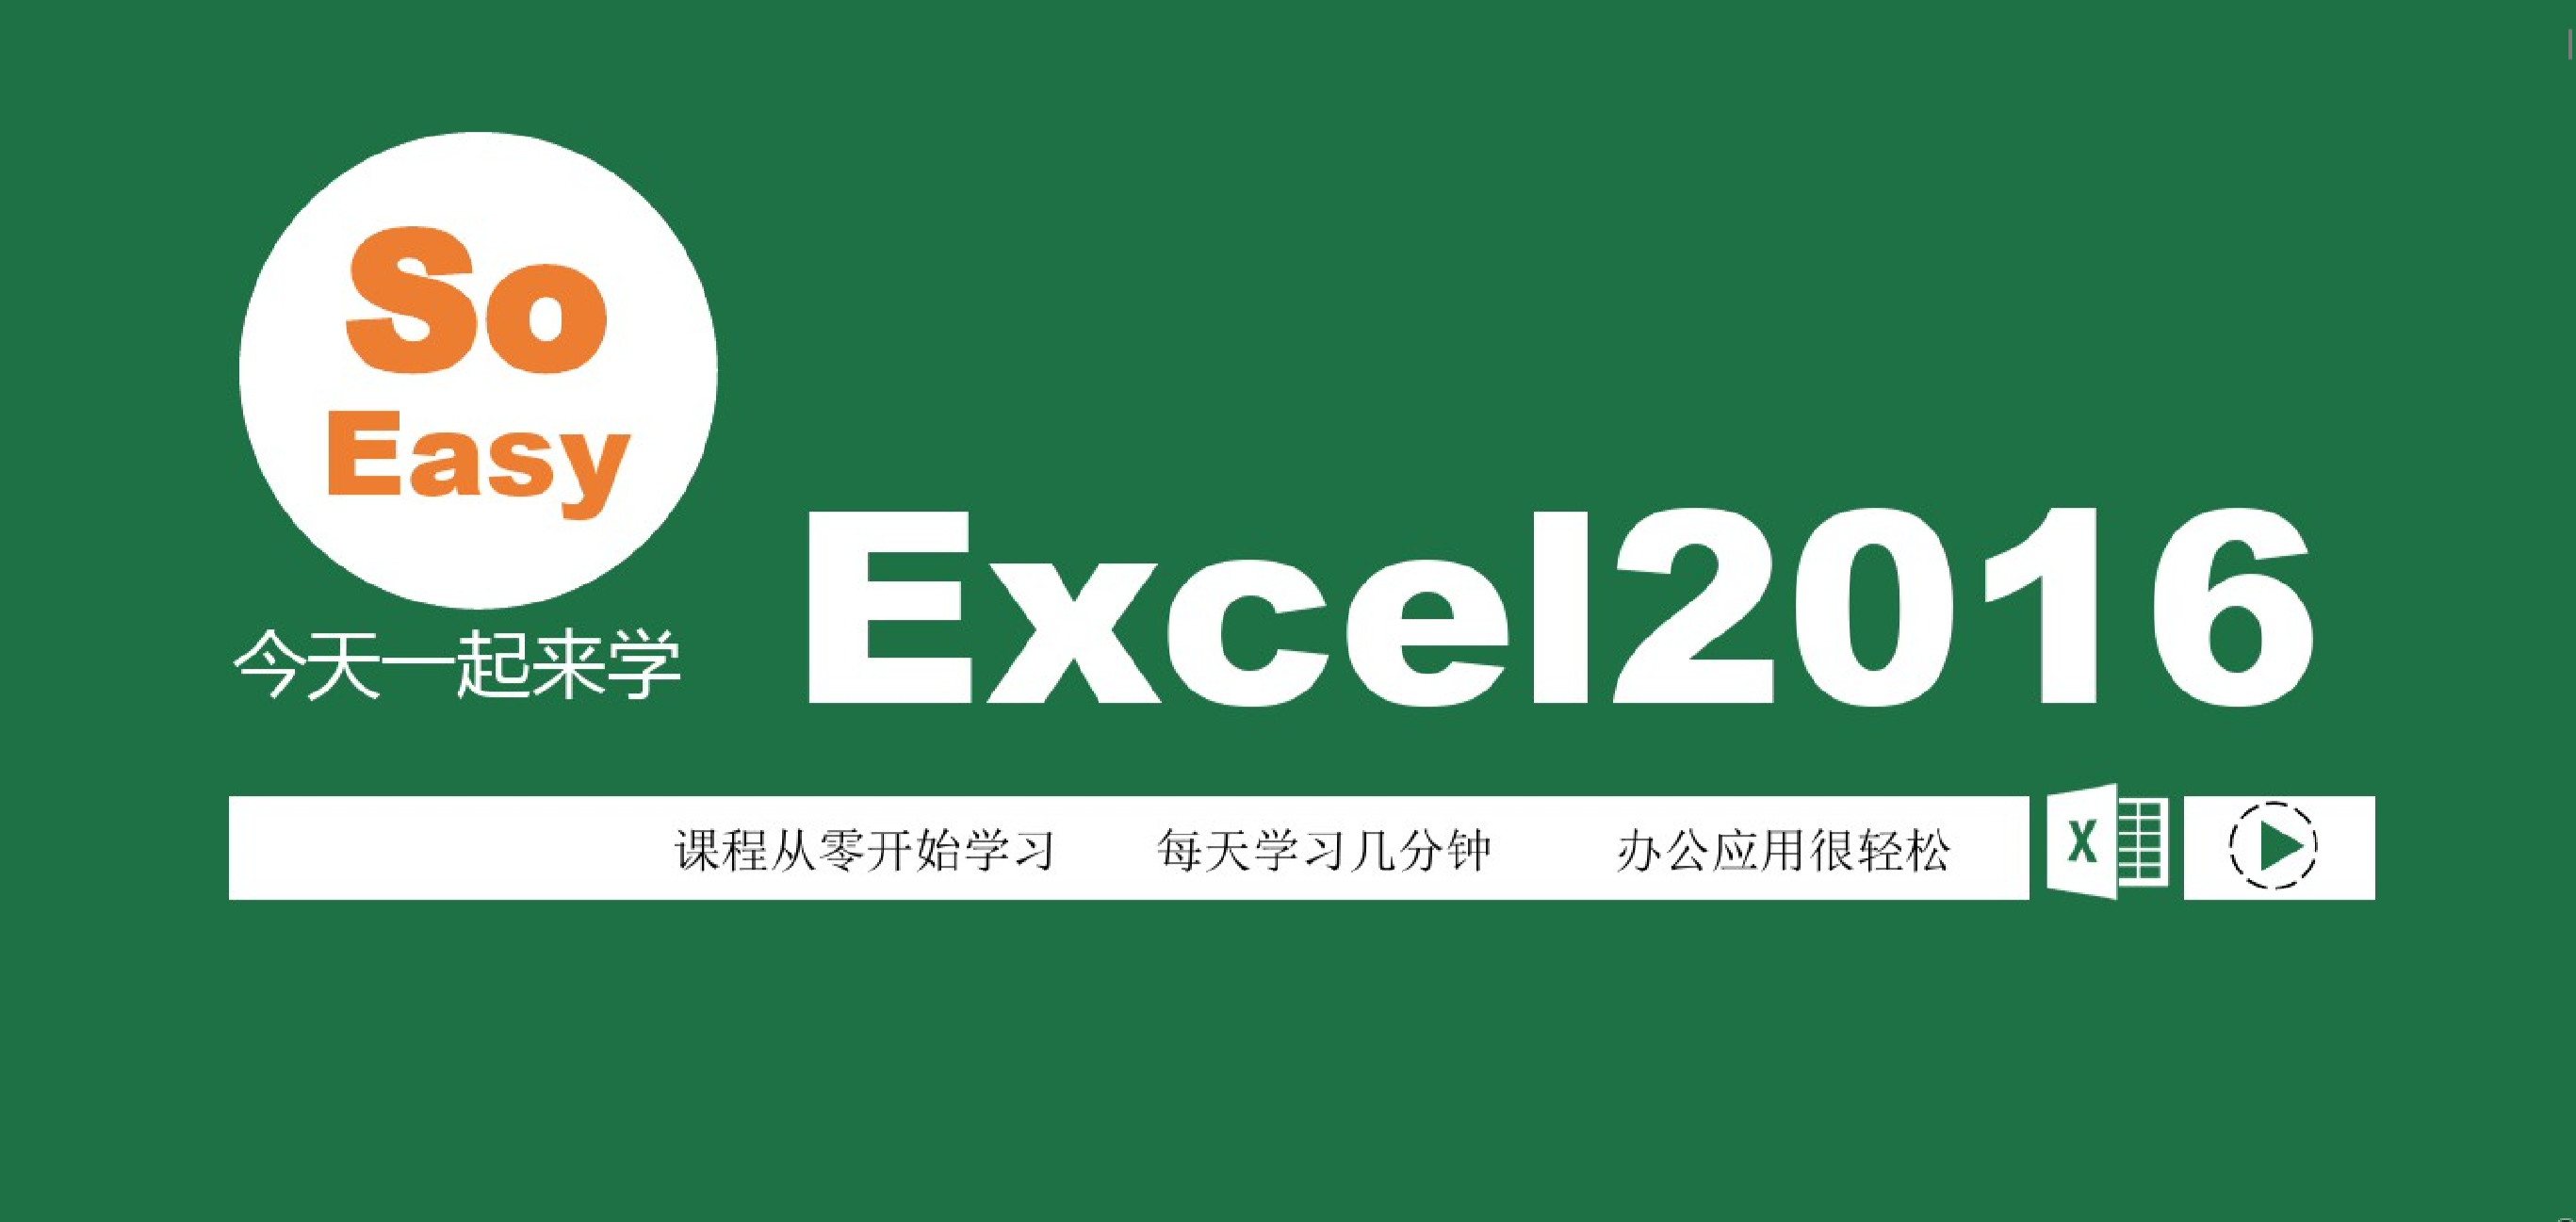 Excel2016系列视频教程——零基础学通Office（连载中）